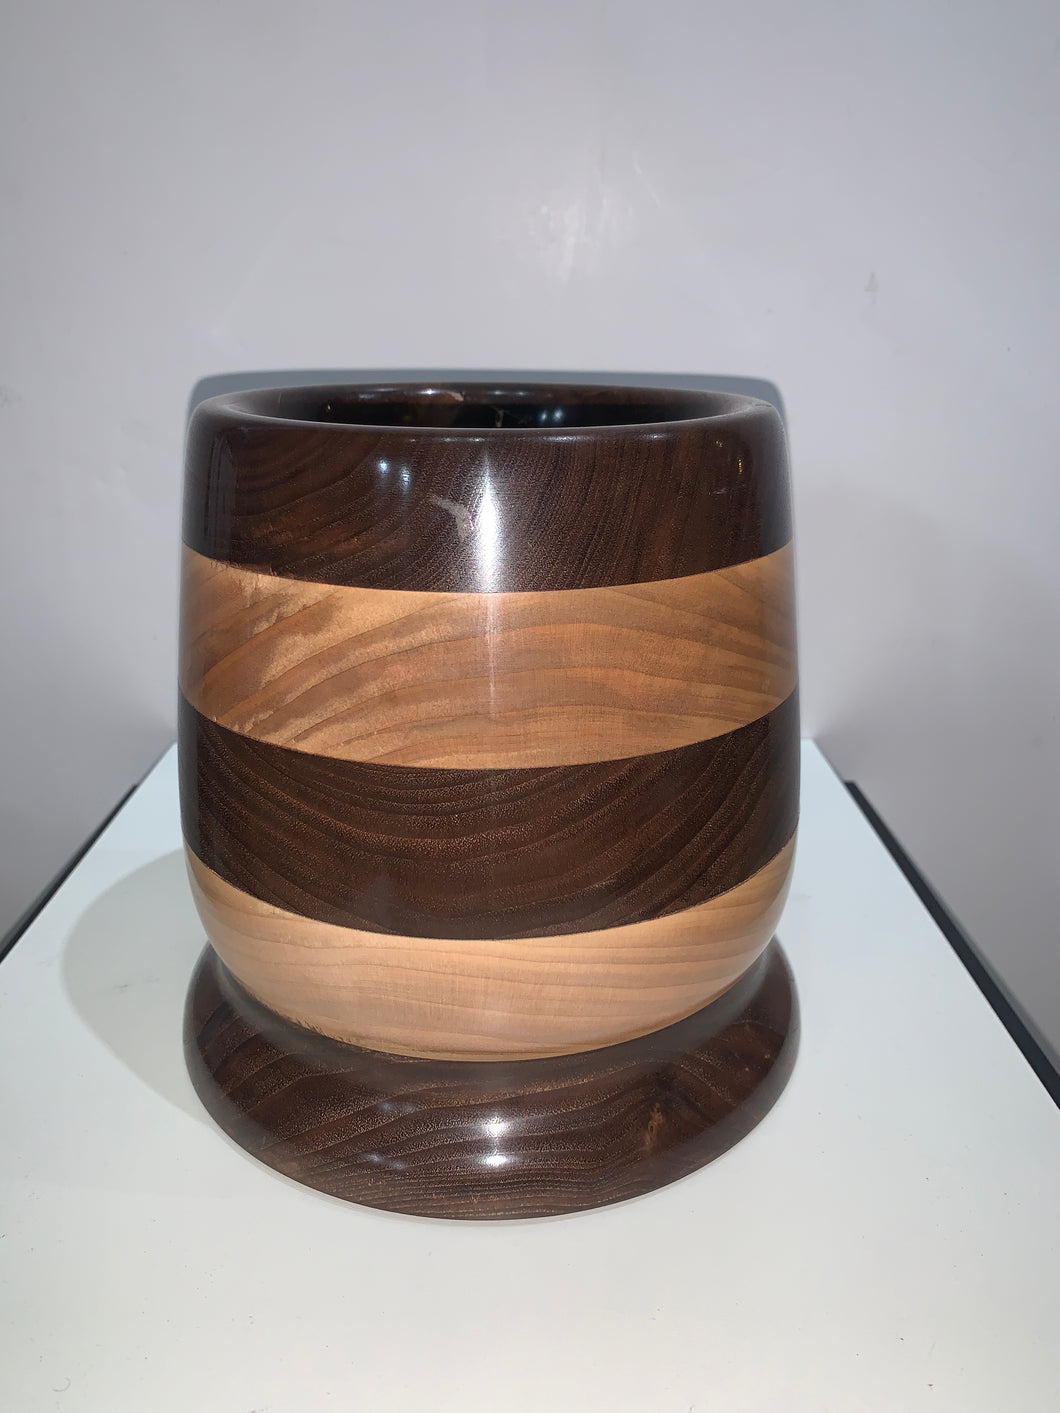 Beautiful wooden bowl